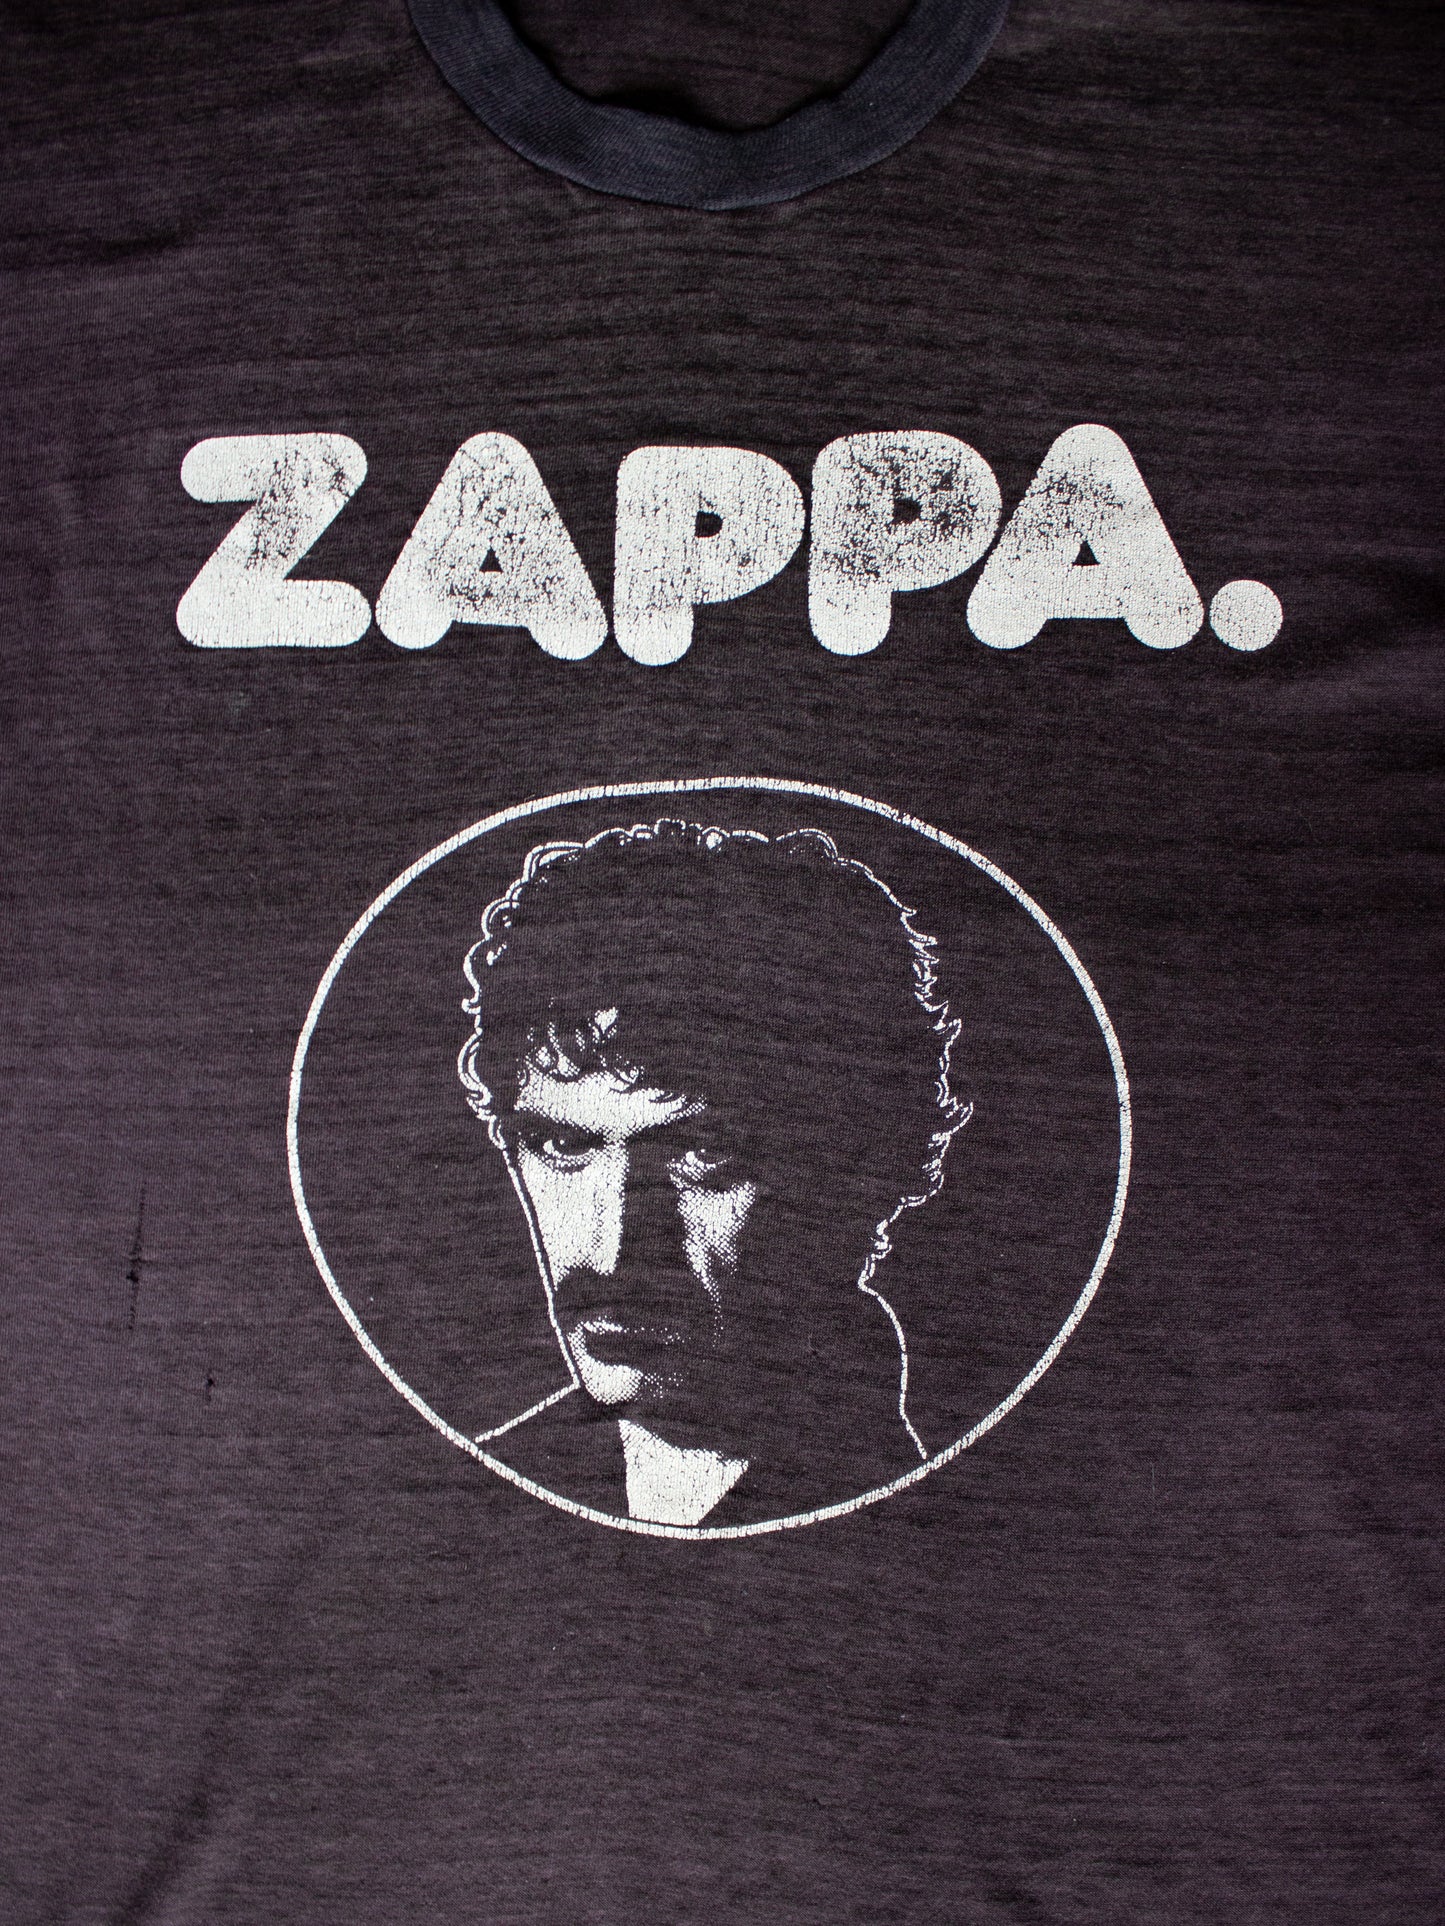 Original 1970's Frank Zappa "The Best" Tour T-Shirt (Medium)